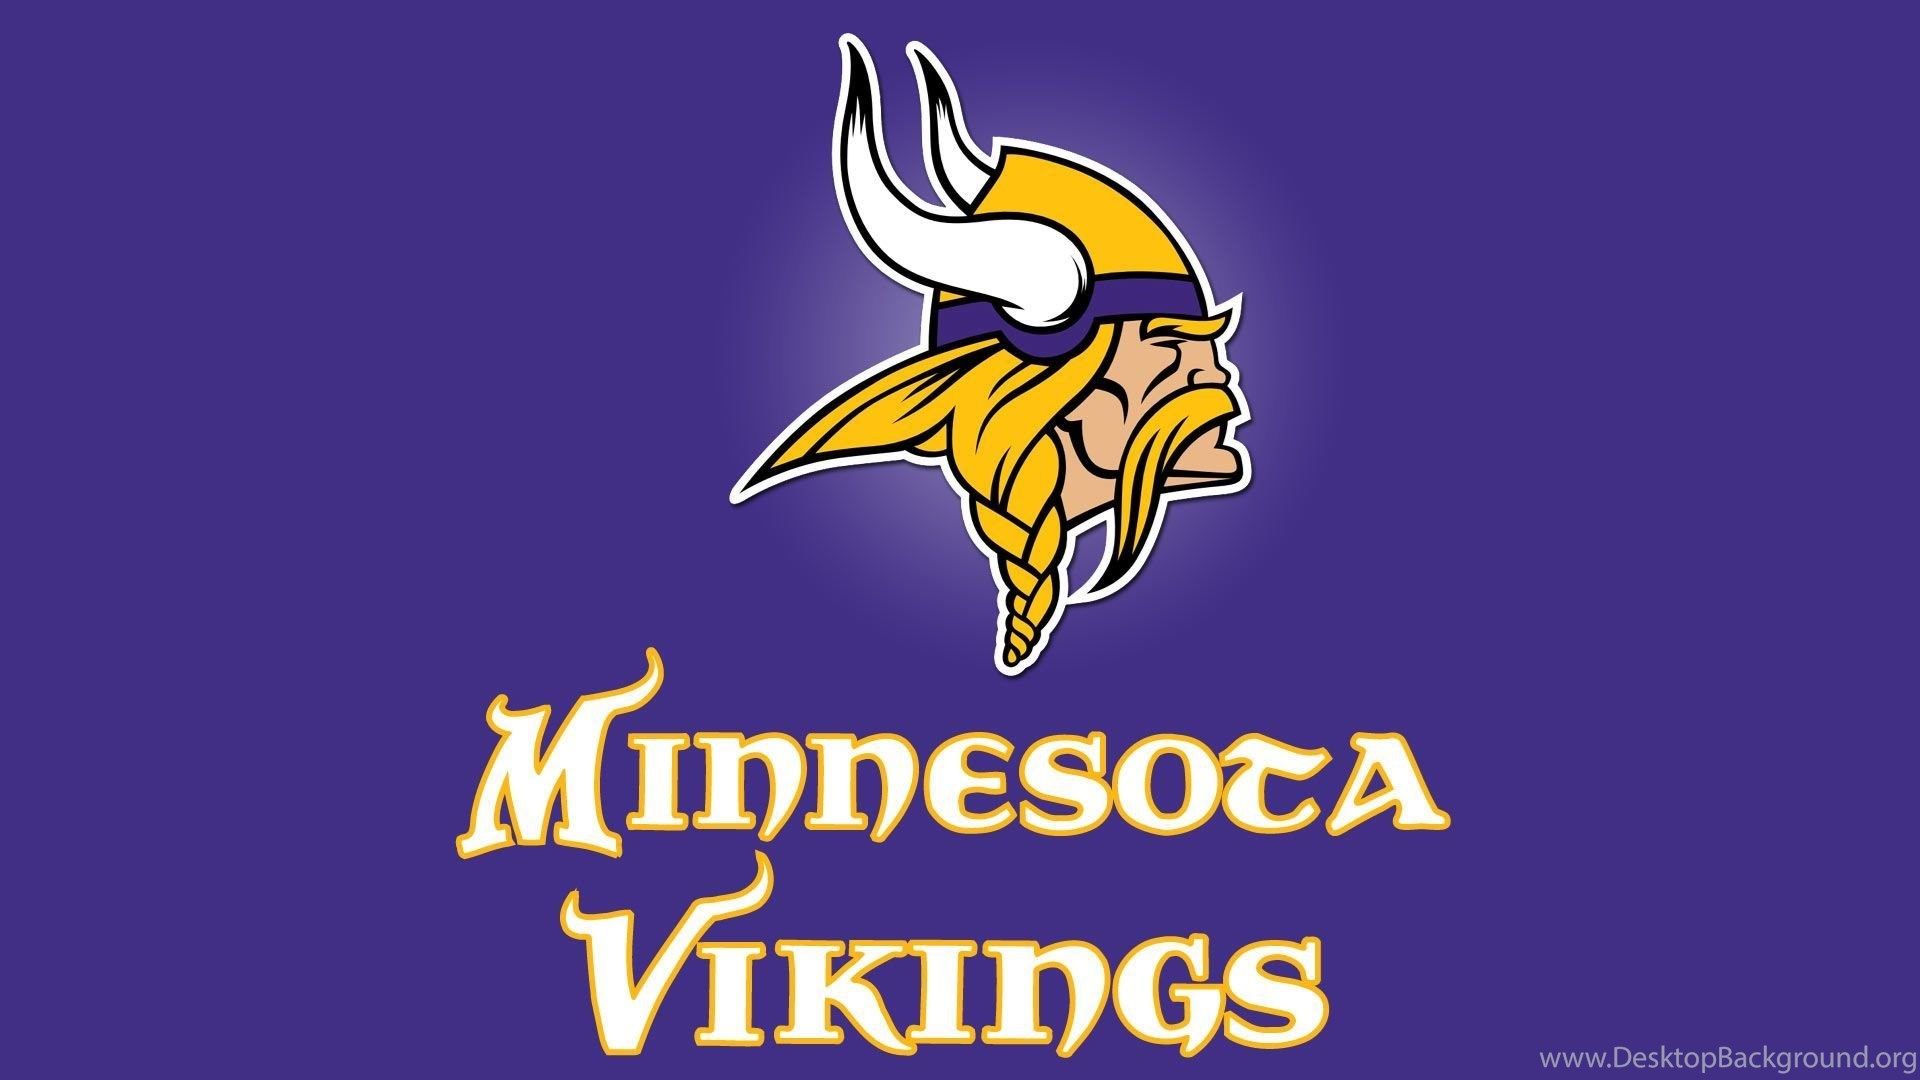 NFL Team Logo Minnesota Vikings Wallpaper HD. Free Desktop